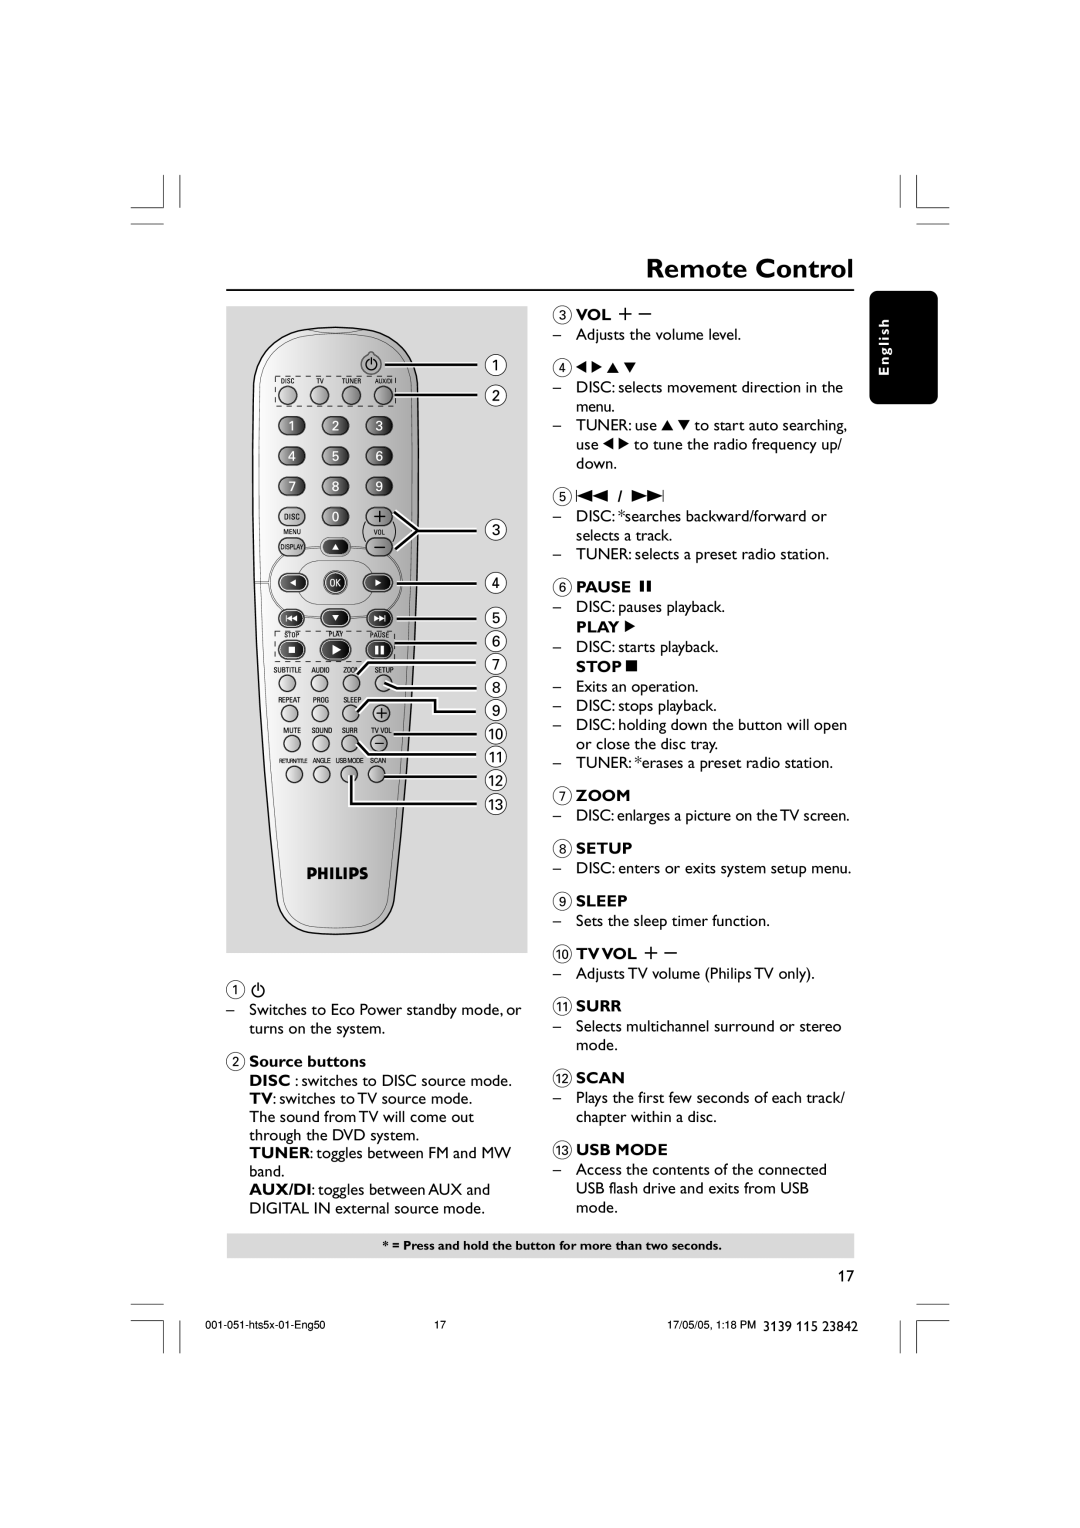 Philips HTS5000W Remote Control, 2Source buttons, 3VOL +, 6PAUSE Å, Playé, Stopç, 7ZOOM, 8SETUP, 9SLEEP, 0TV VOL +, Surr 